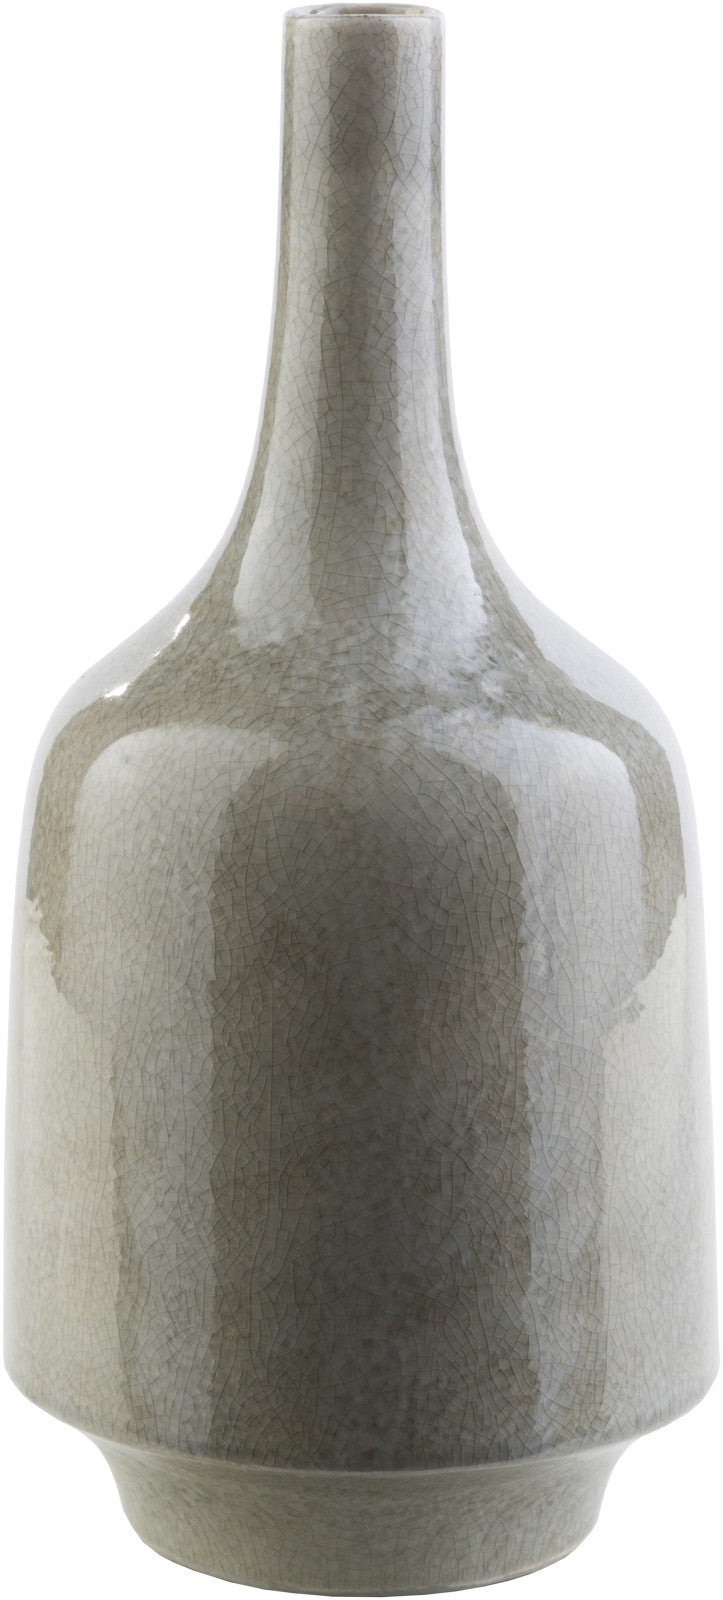 Surya Olsen OLS-100 Vase main image